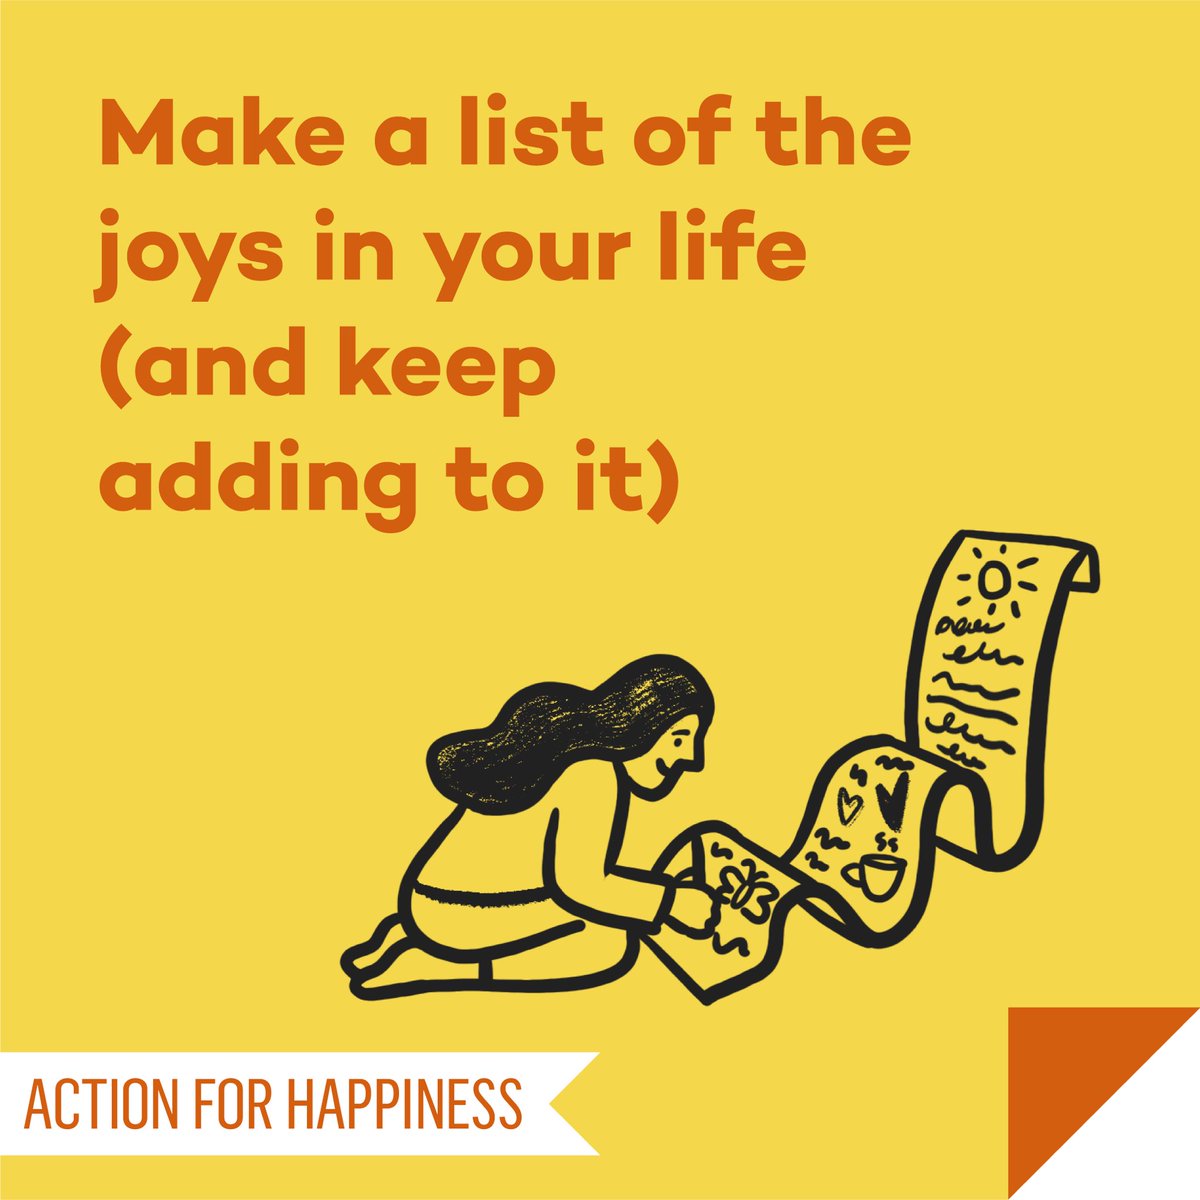 Joyful June - Day 30: Make a list of the joys in your life (and keep adding to it) actionforhappiness.org/joyful-june #JoyfulJune